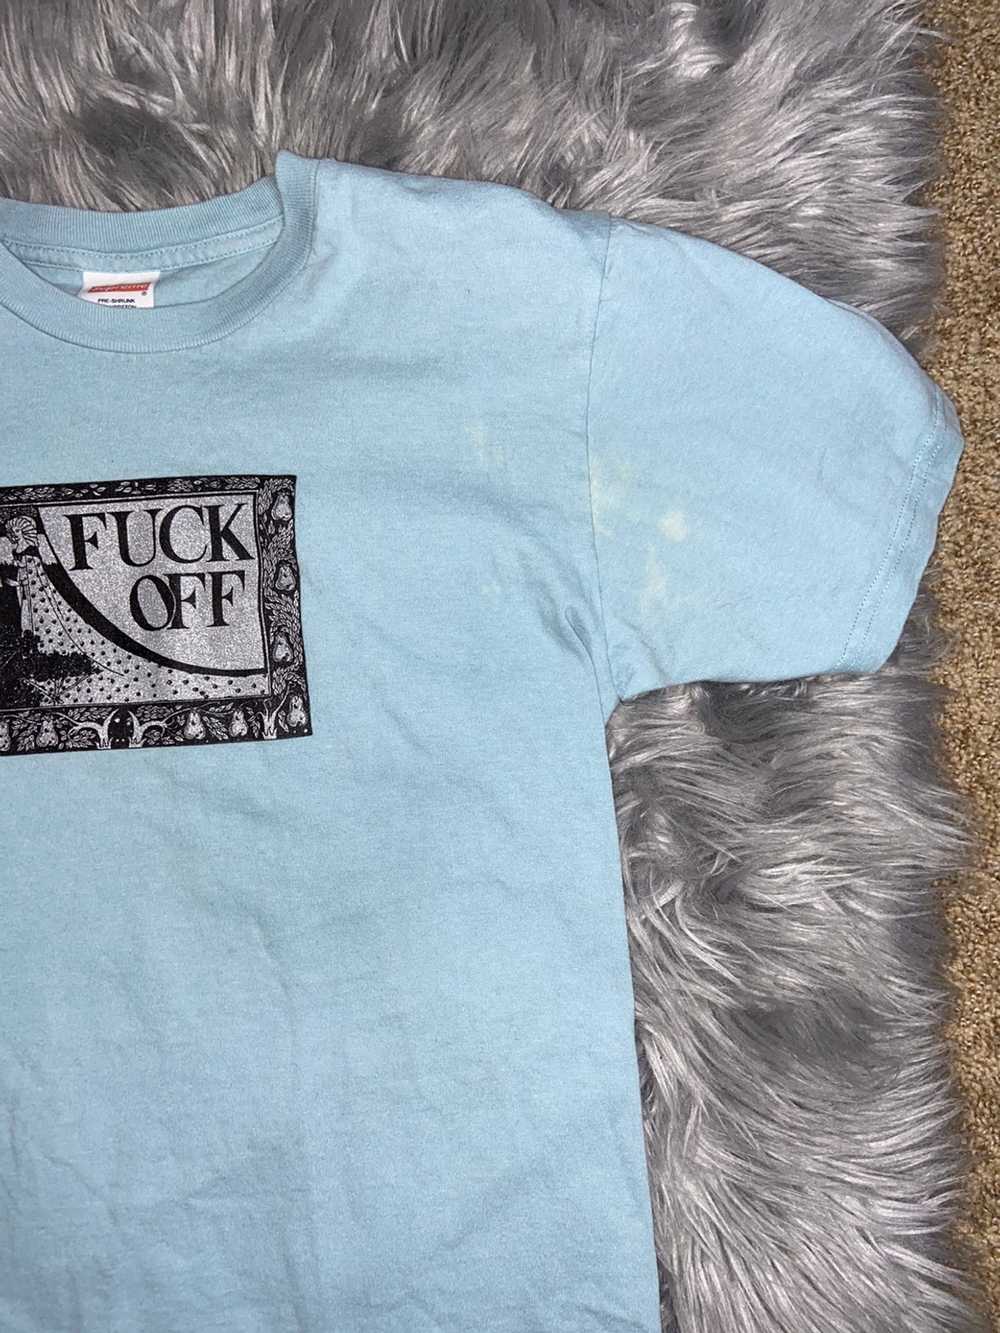 Supreme Fuck off t shirt - image 4